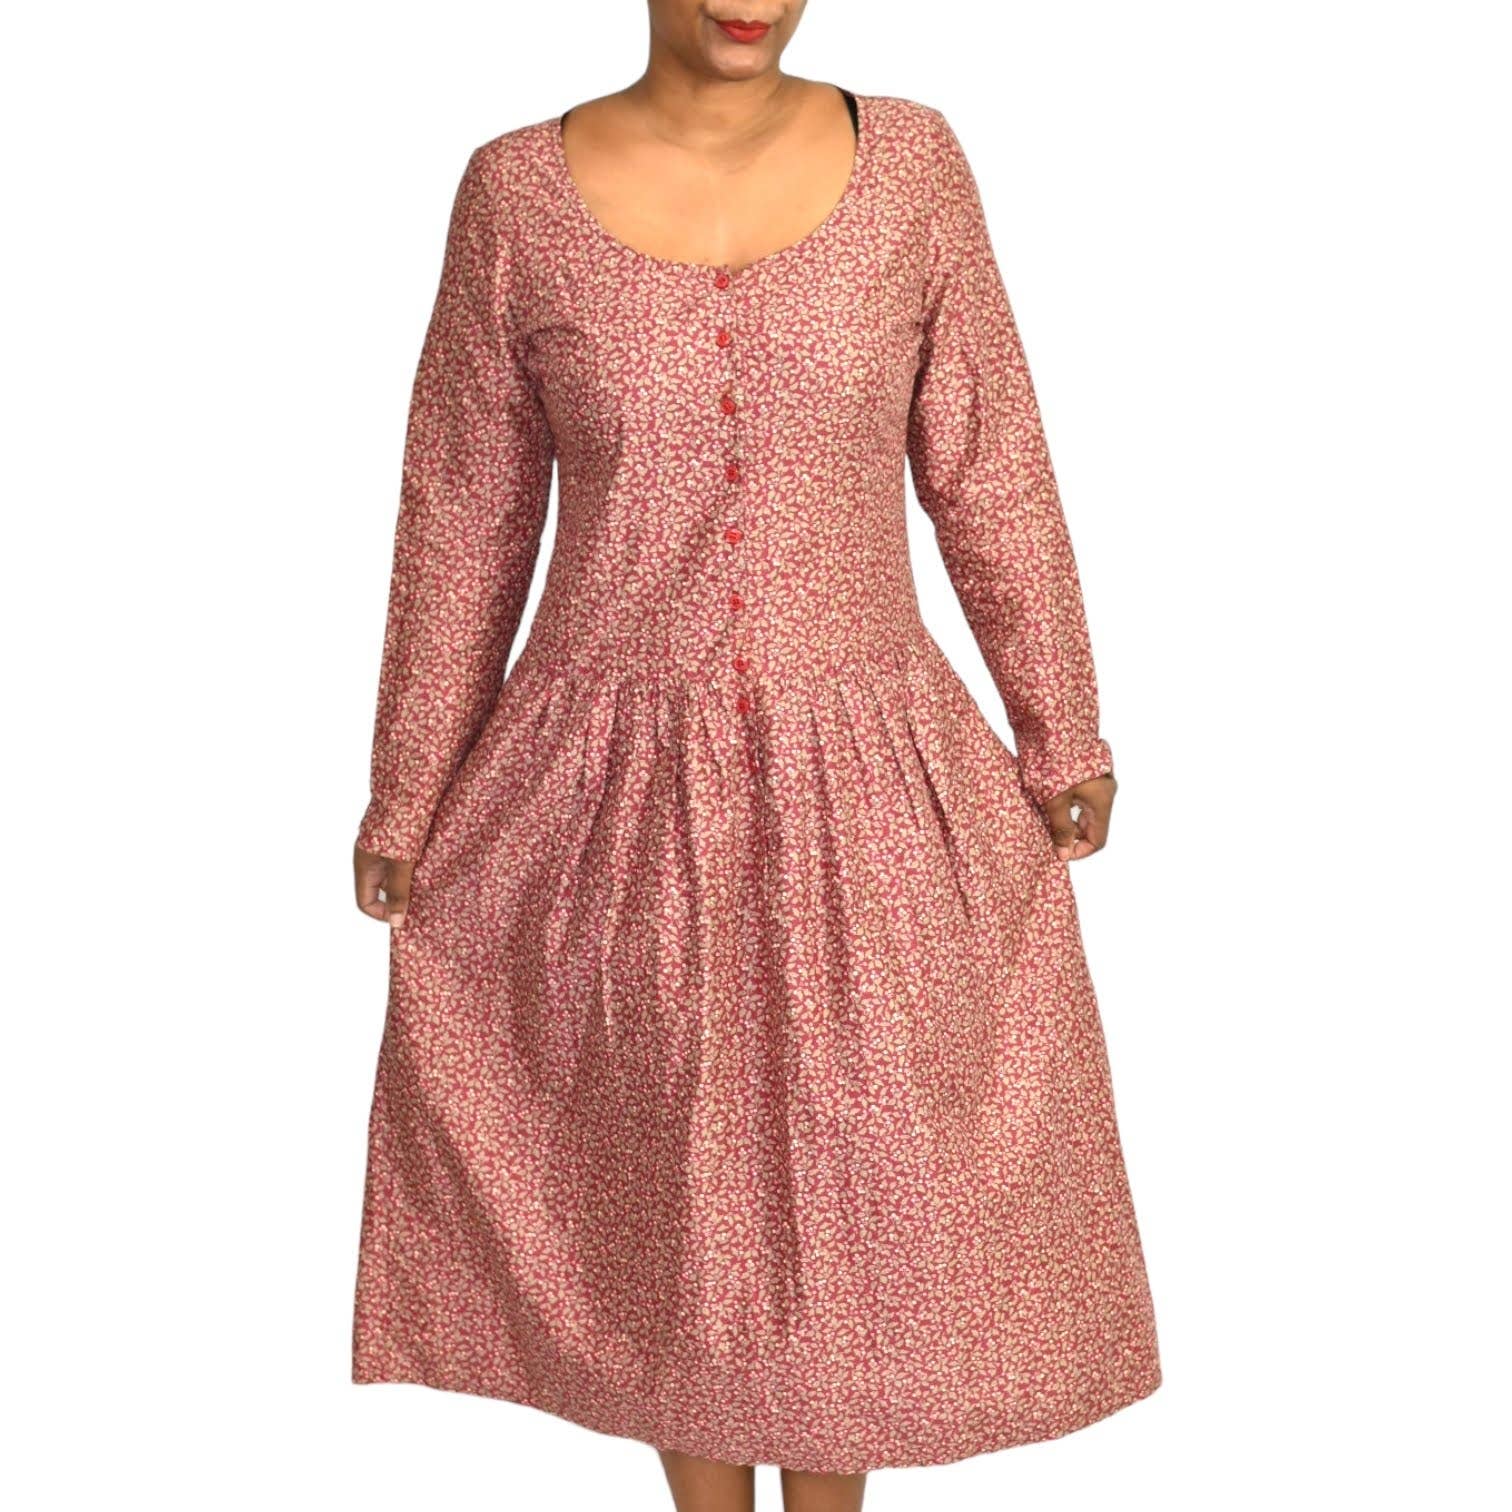 Vintage Cacharel Prairie Dress Maxi Red Floral Ditsy Cotton Sack Modest Size Medium